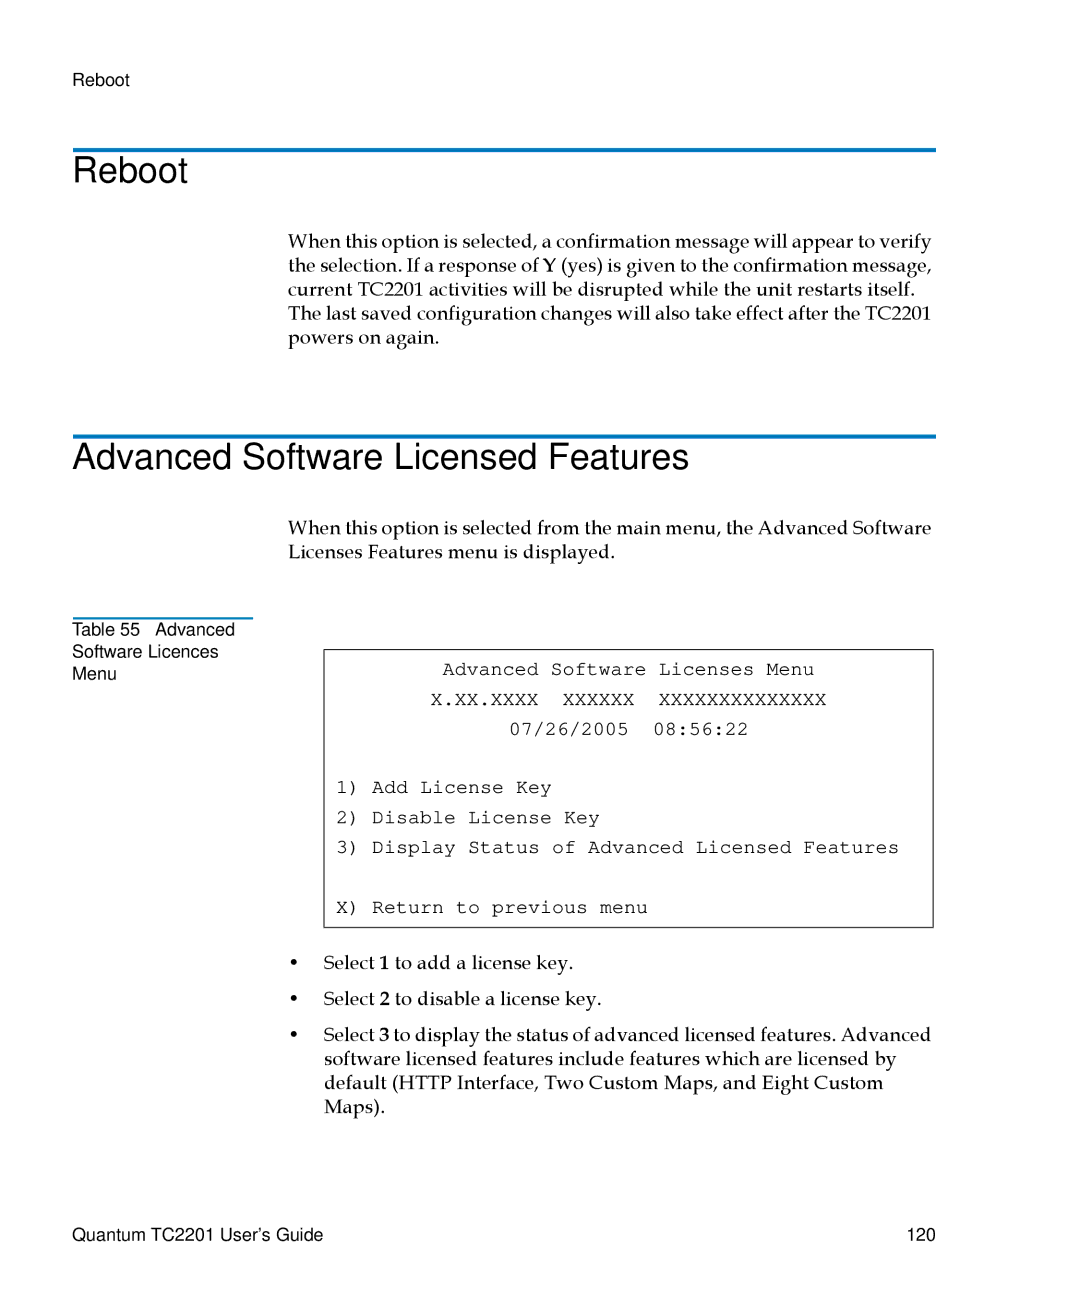 Quantum TC2201 manual Reboot, Advanced Software Licensed Features 